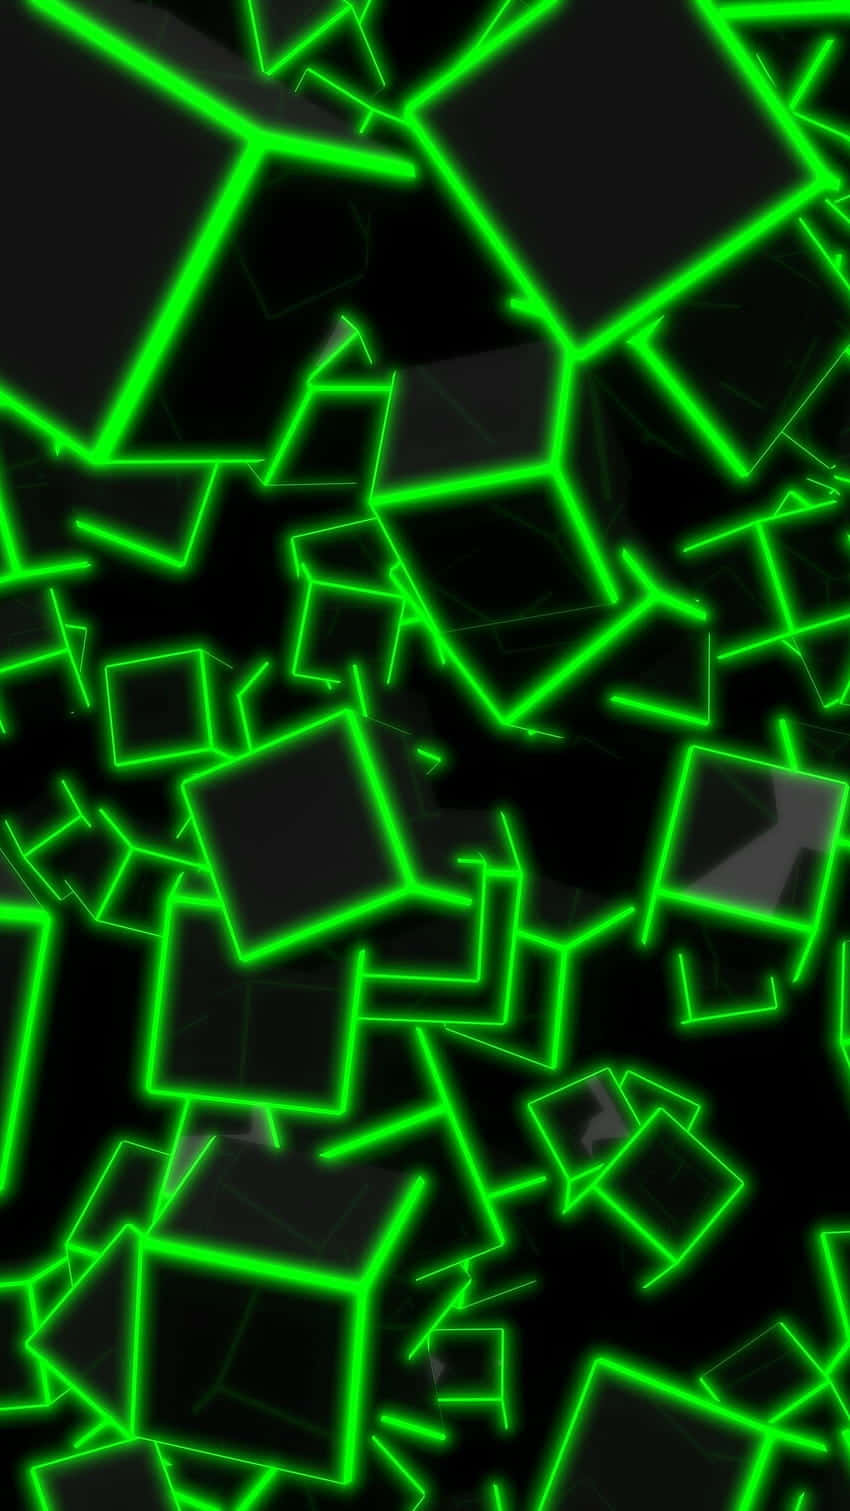 Green Glowing Cubes In The Dark Wallpaper